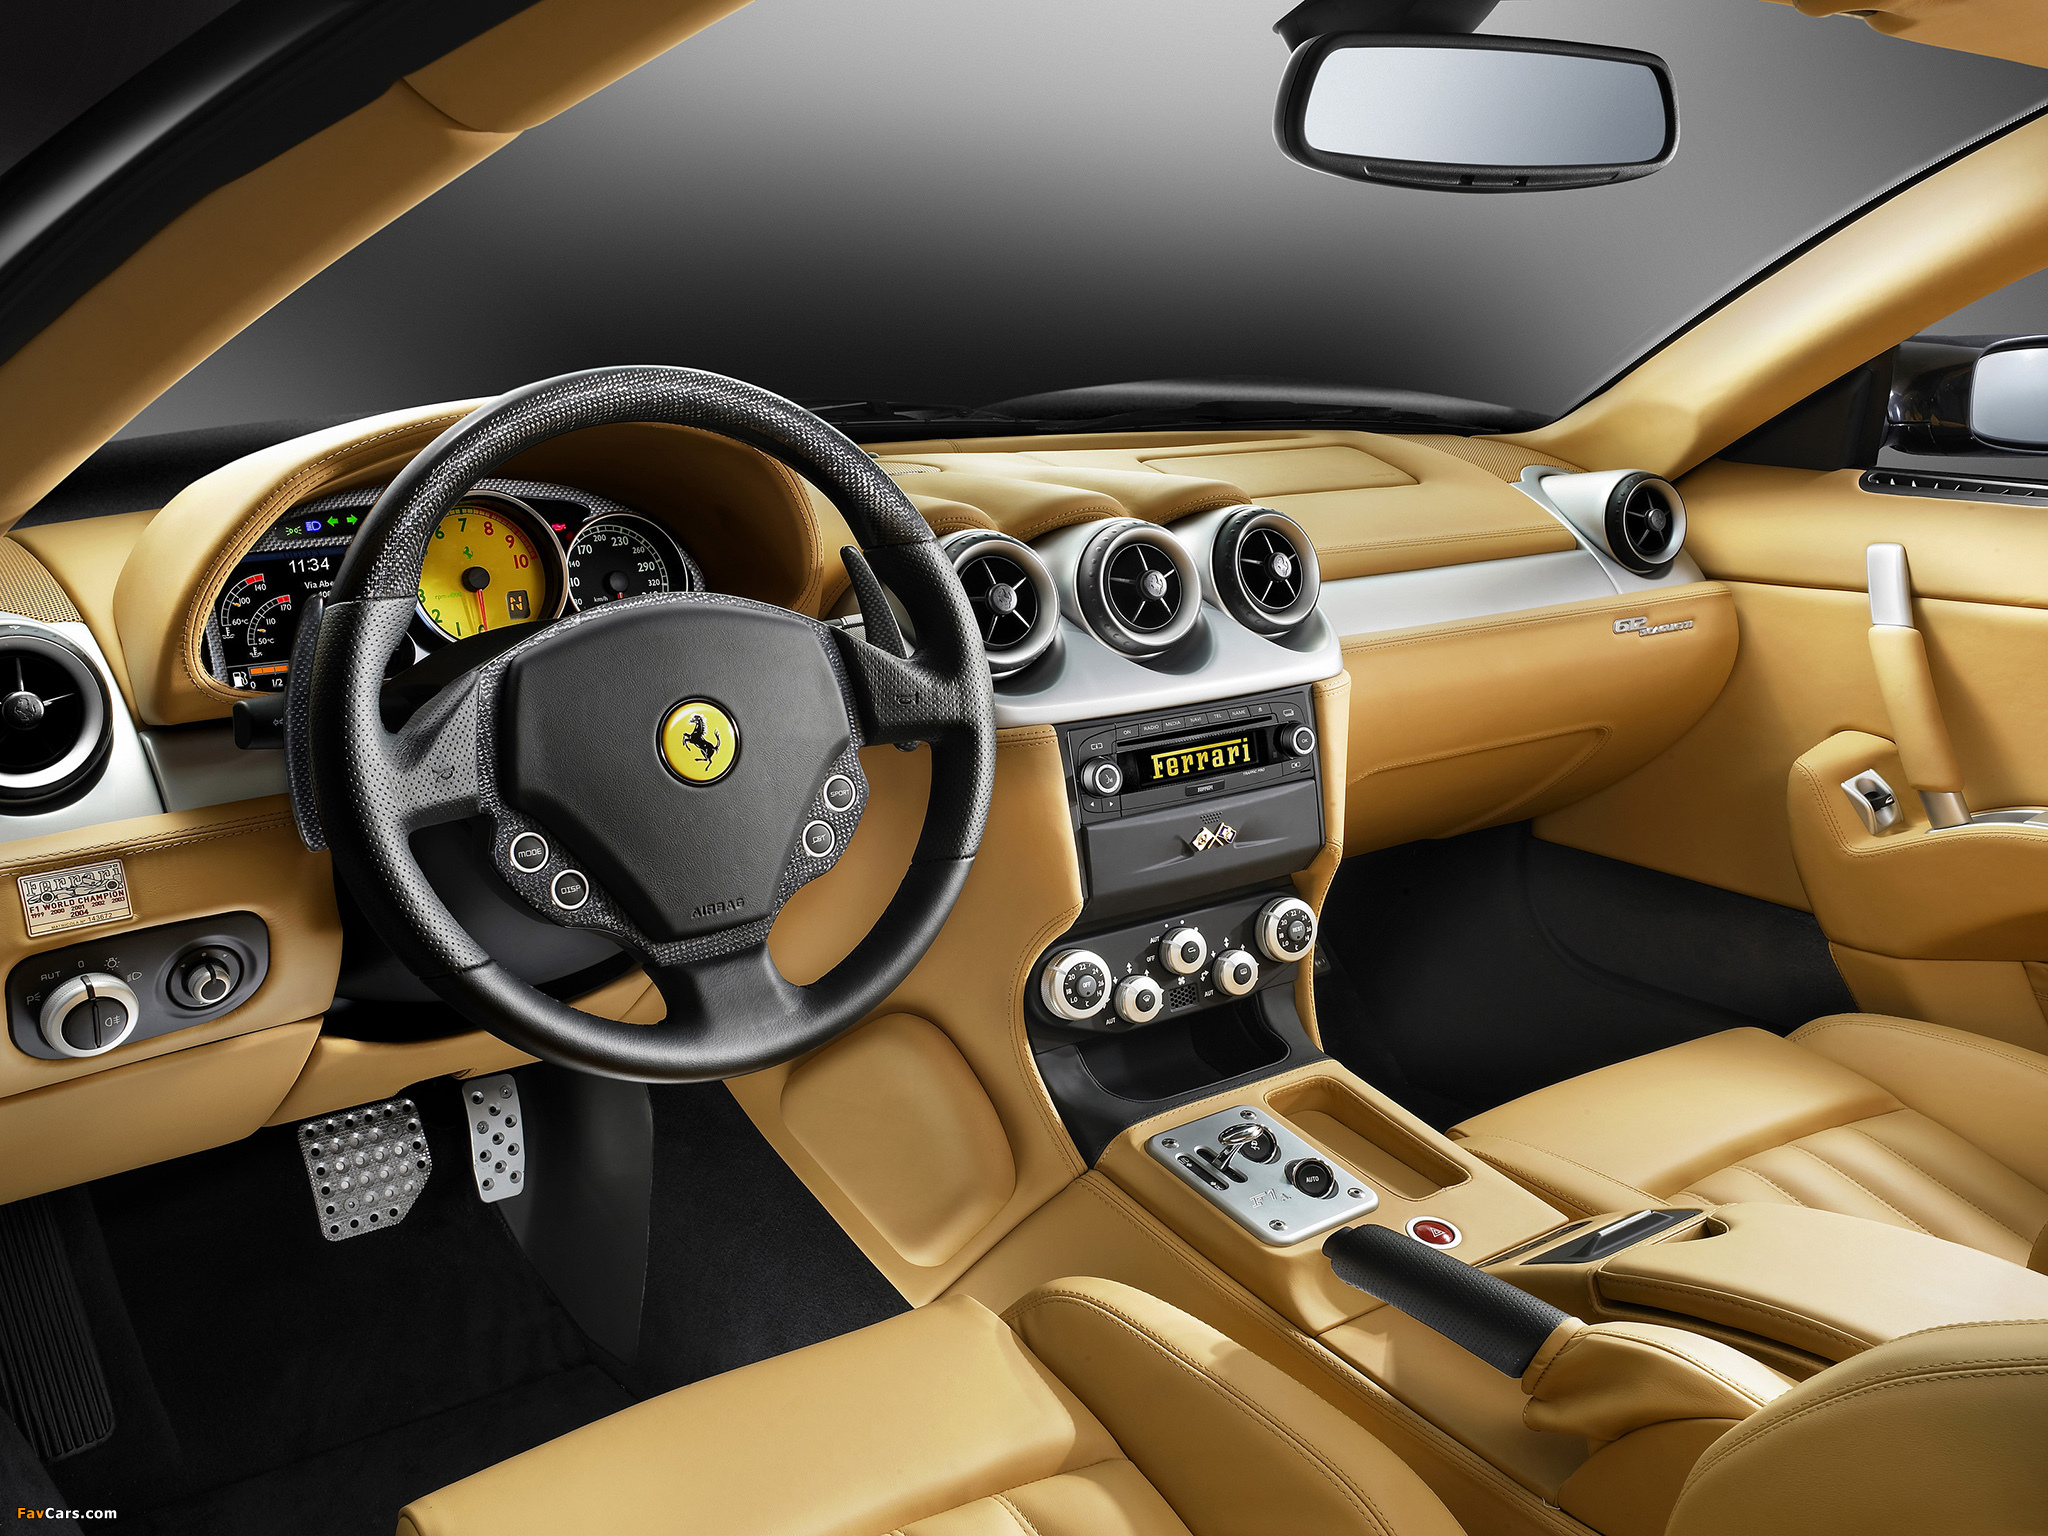 Cars inside. Ferrari 612 Scaglietti салон. Феррари 612 Скальетти. Машина Ferrari 612 Scaglietti салон. Ferrari 612 Interior.